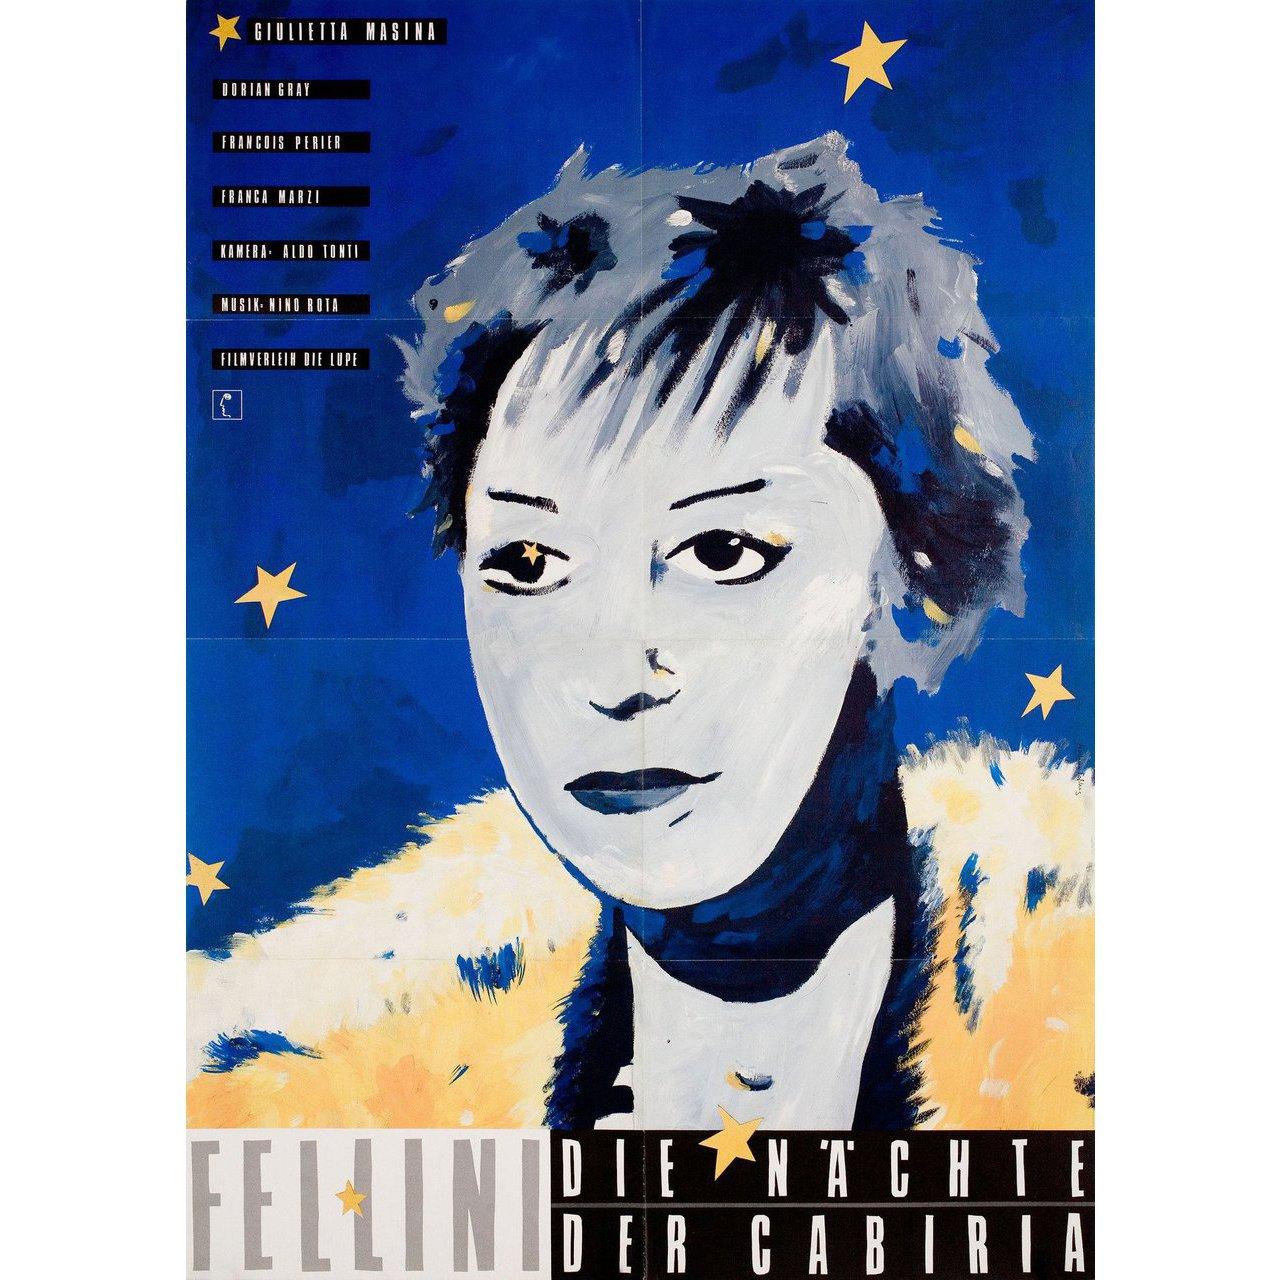 Original 1979 re-release German A1 poster for the 1957 film Nights of Cabiria (Le notti di Cabiria) directed by Federico Fellini with Giulietta Masina / Francois Perier / Franca Marzi / Dorian Gray. Fine condition, folded. Many original posters were